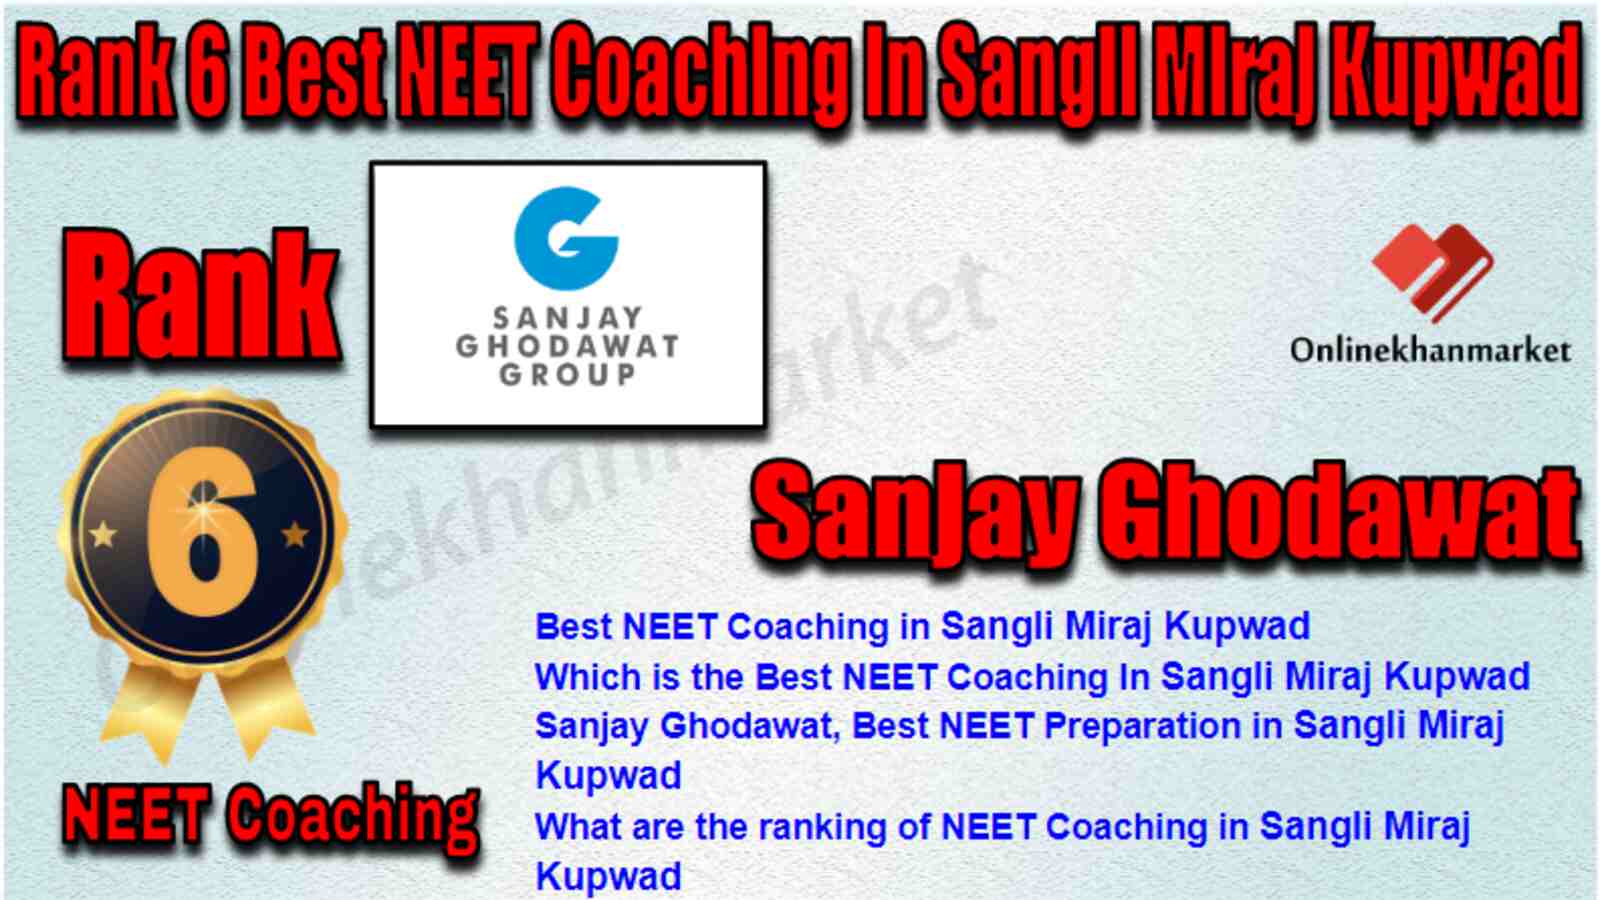 Rank 6 Best NEET Coaching in Sangli Miraj Kupwad